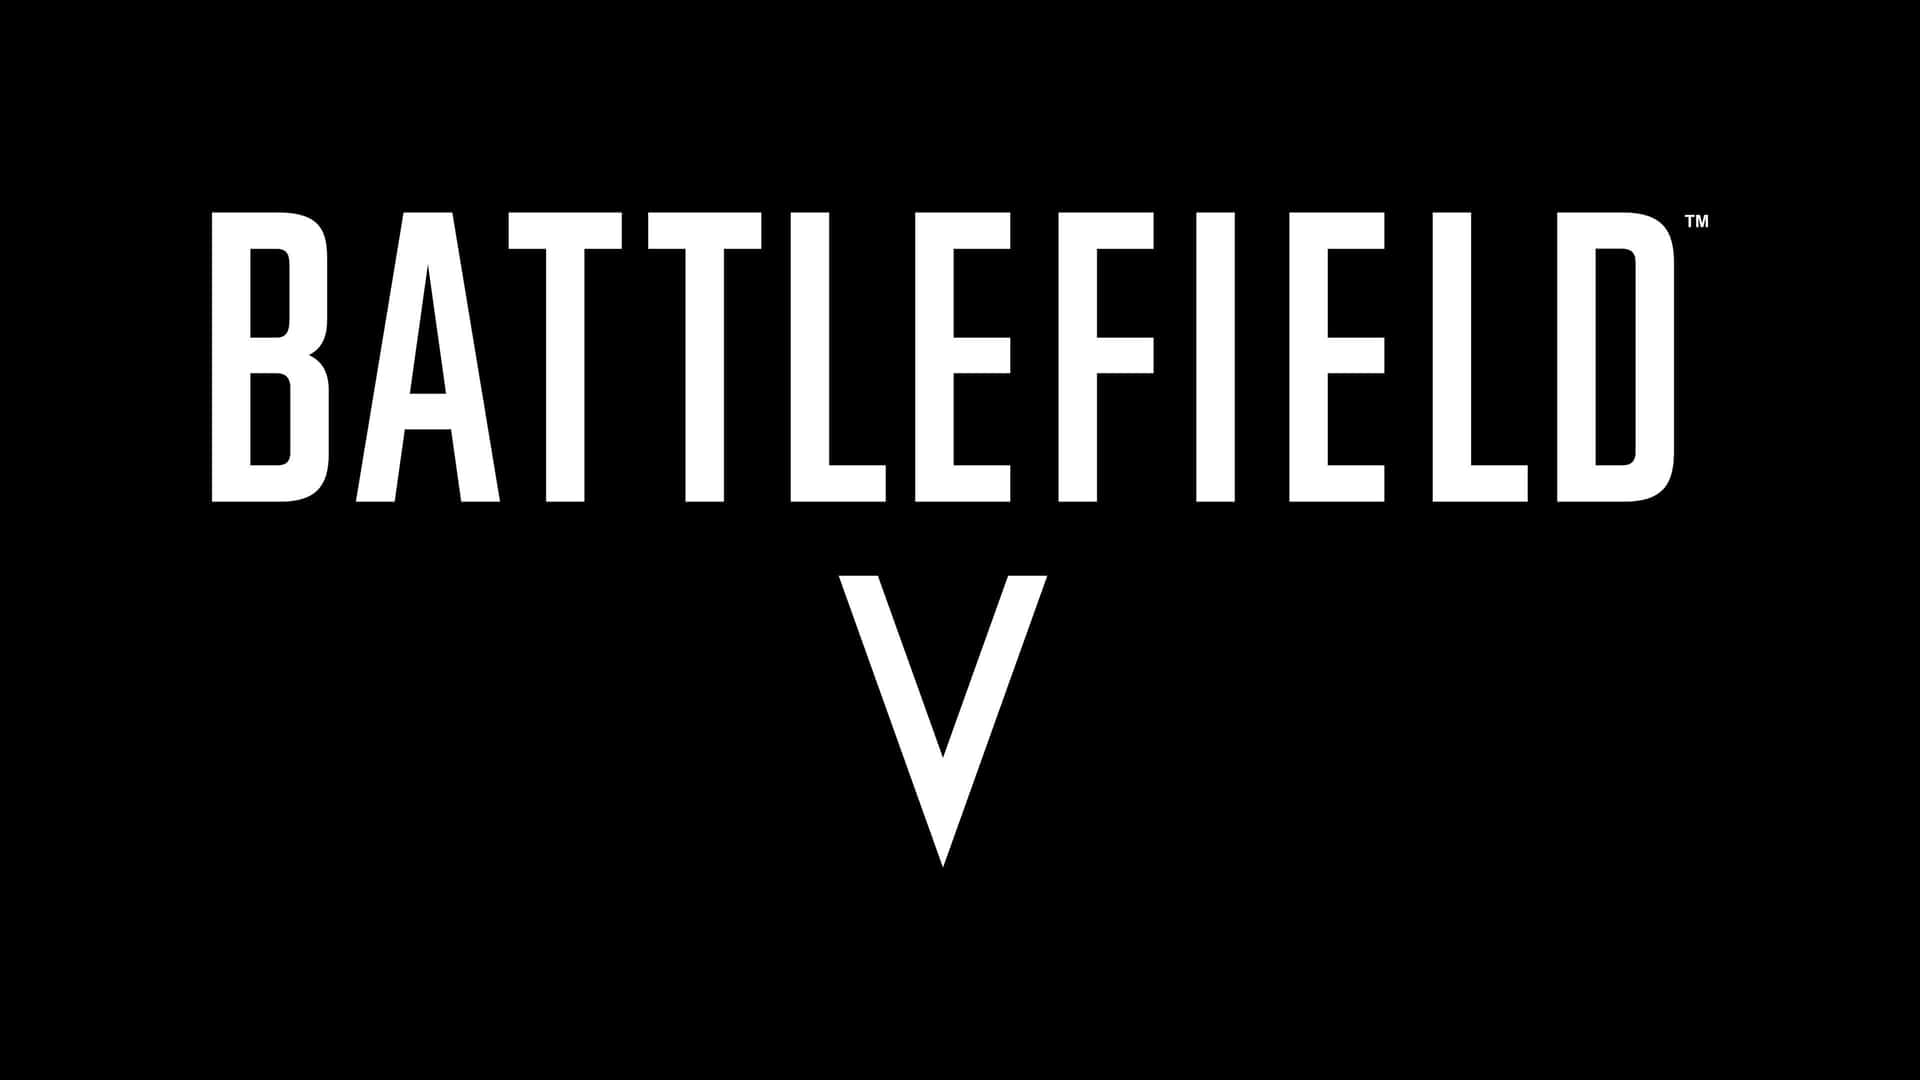 Game Title Typography Battlefield V Background